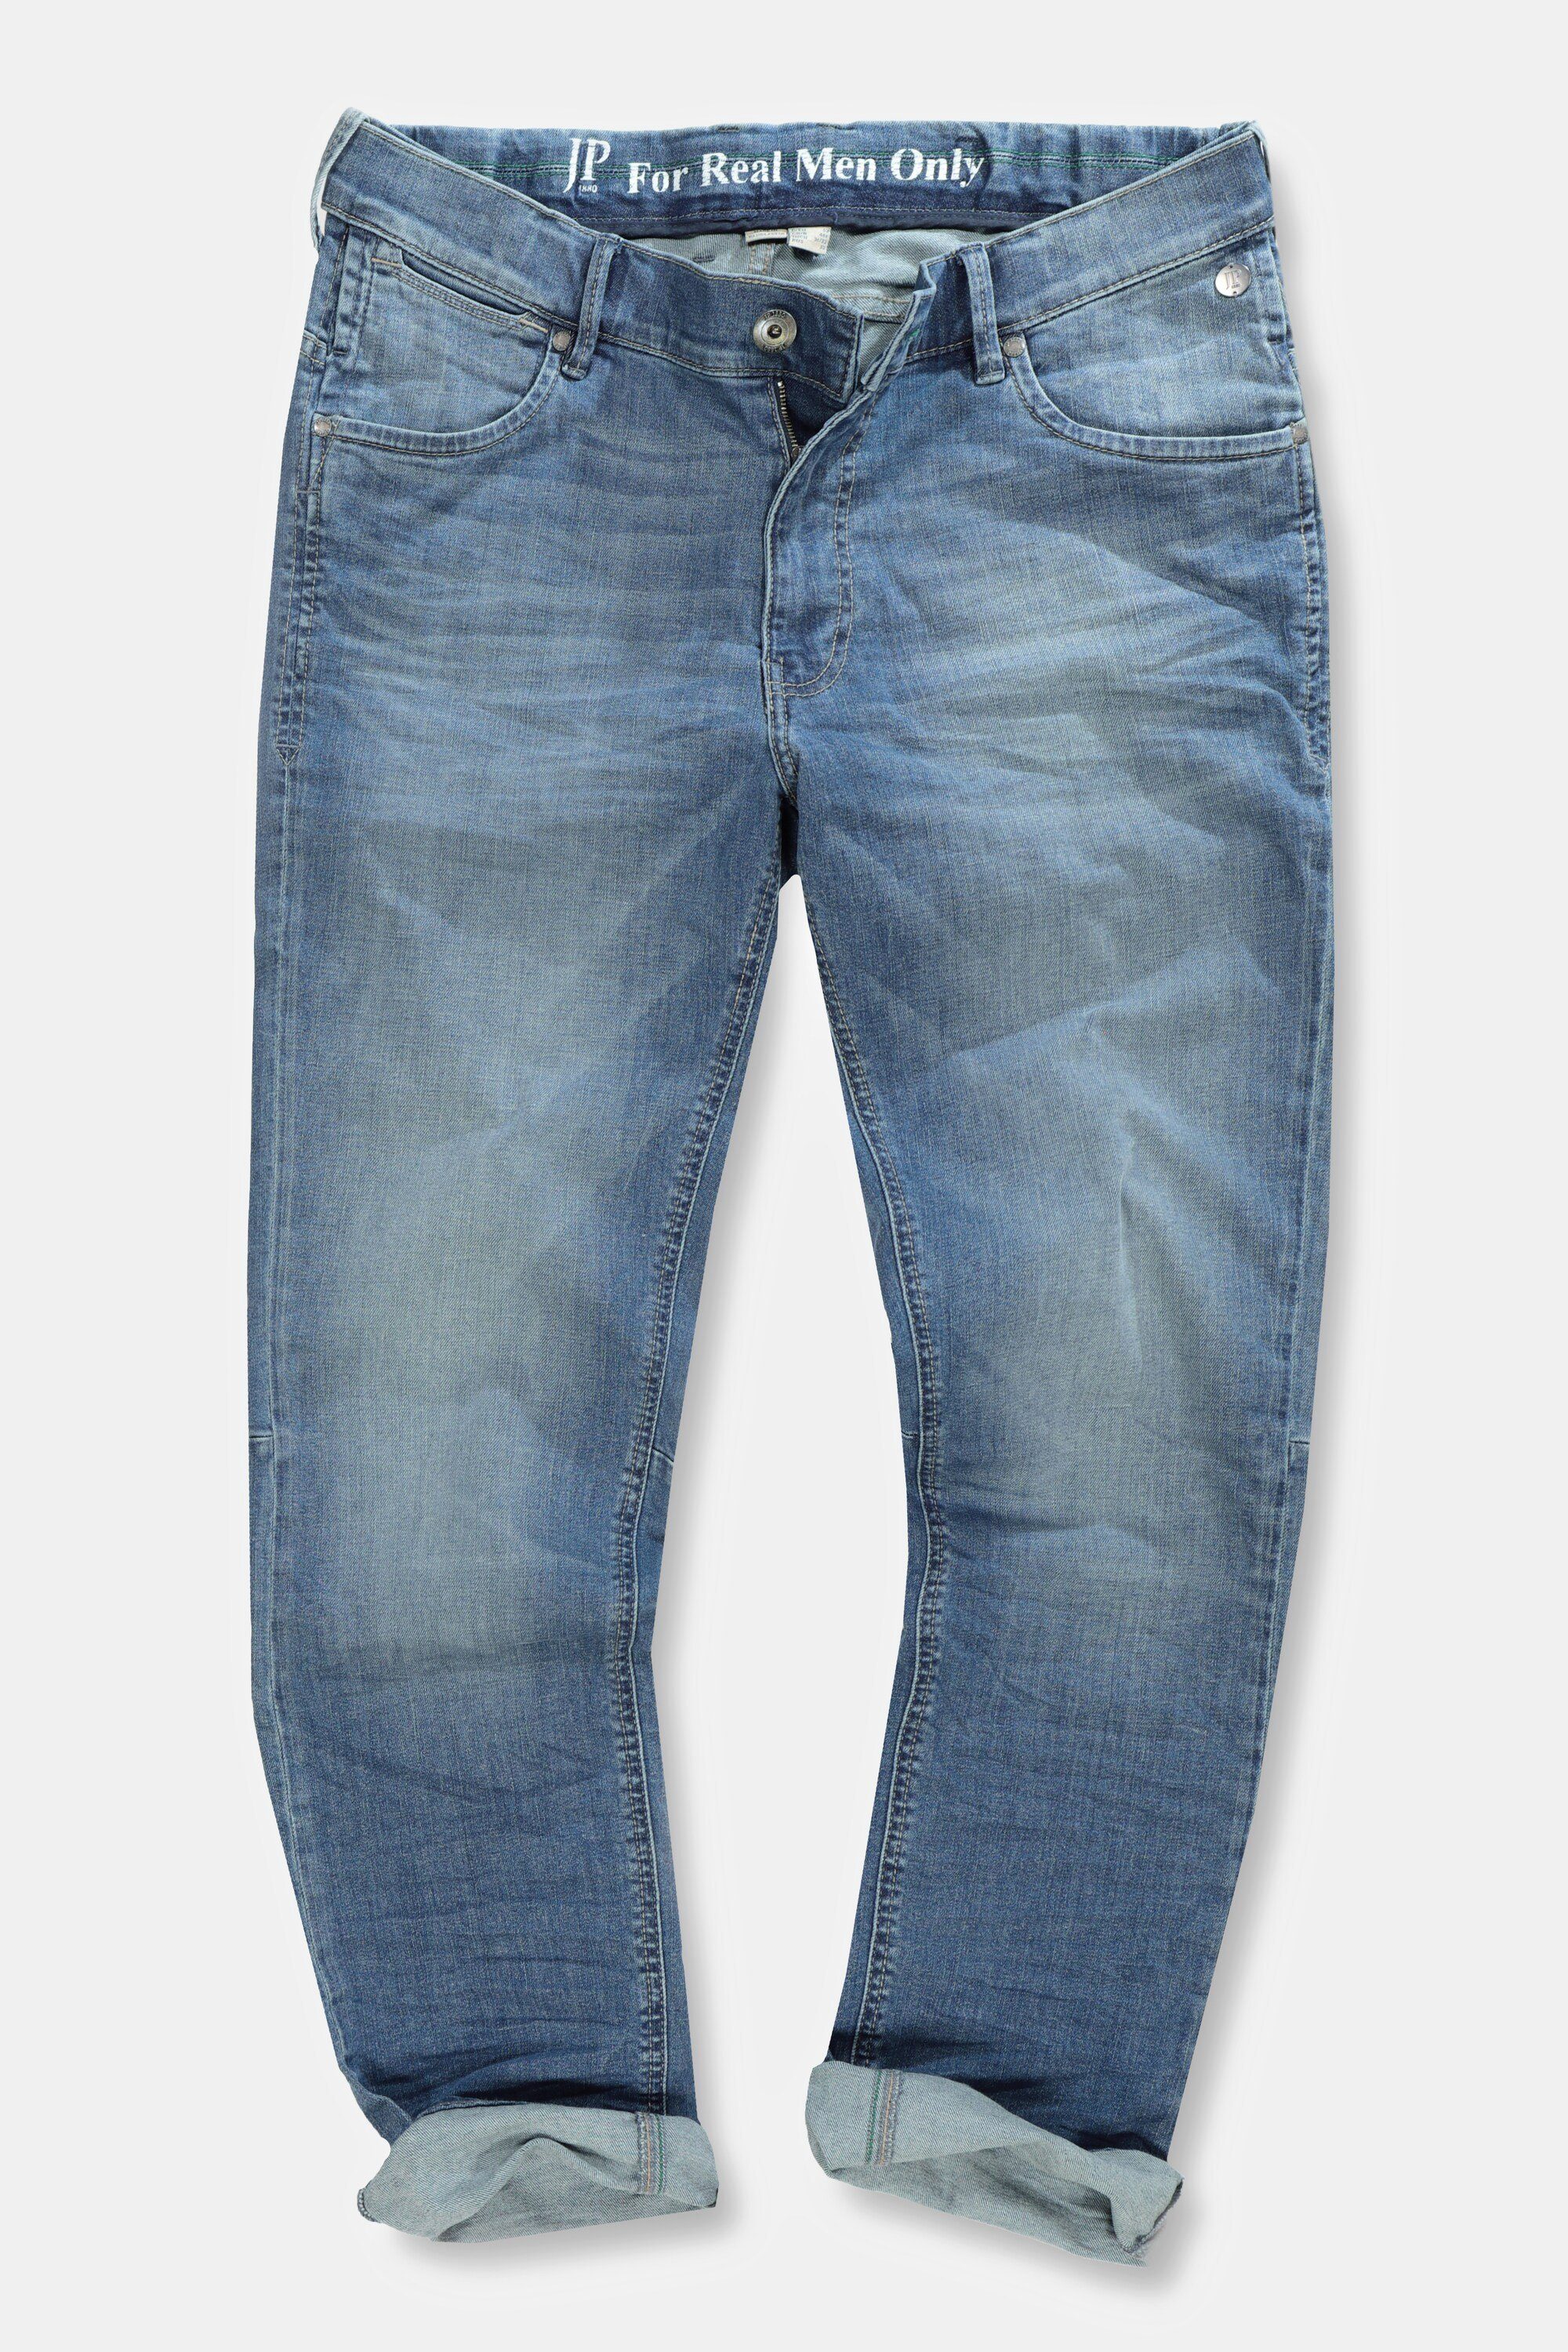 JP1880 Jeans Denim Straight light blue Traveller-Bund Fit Cargohose